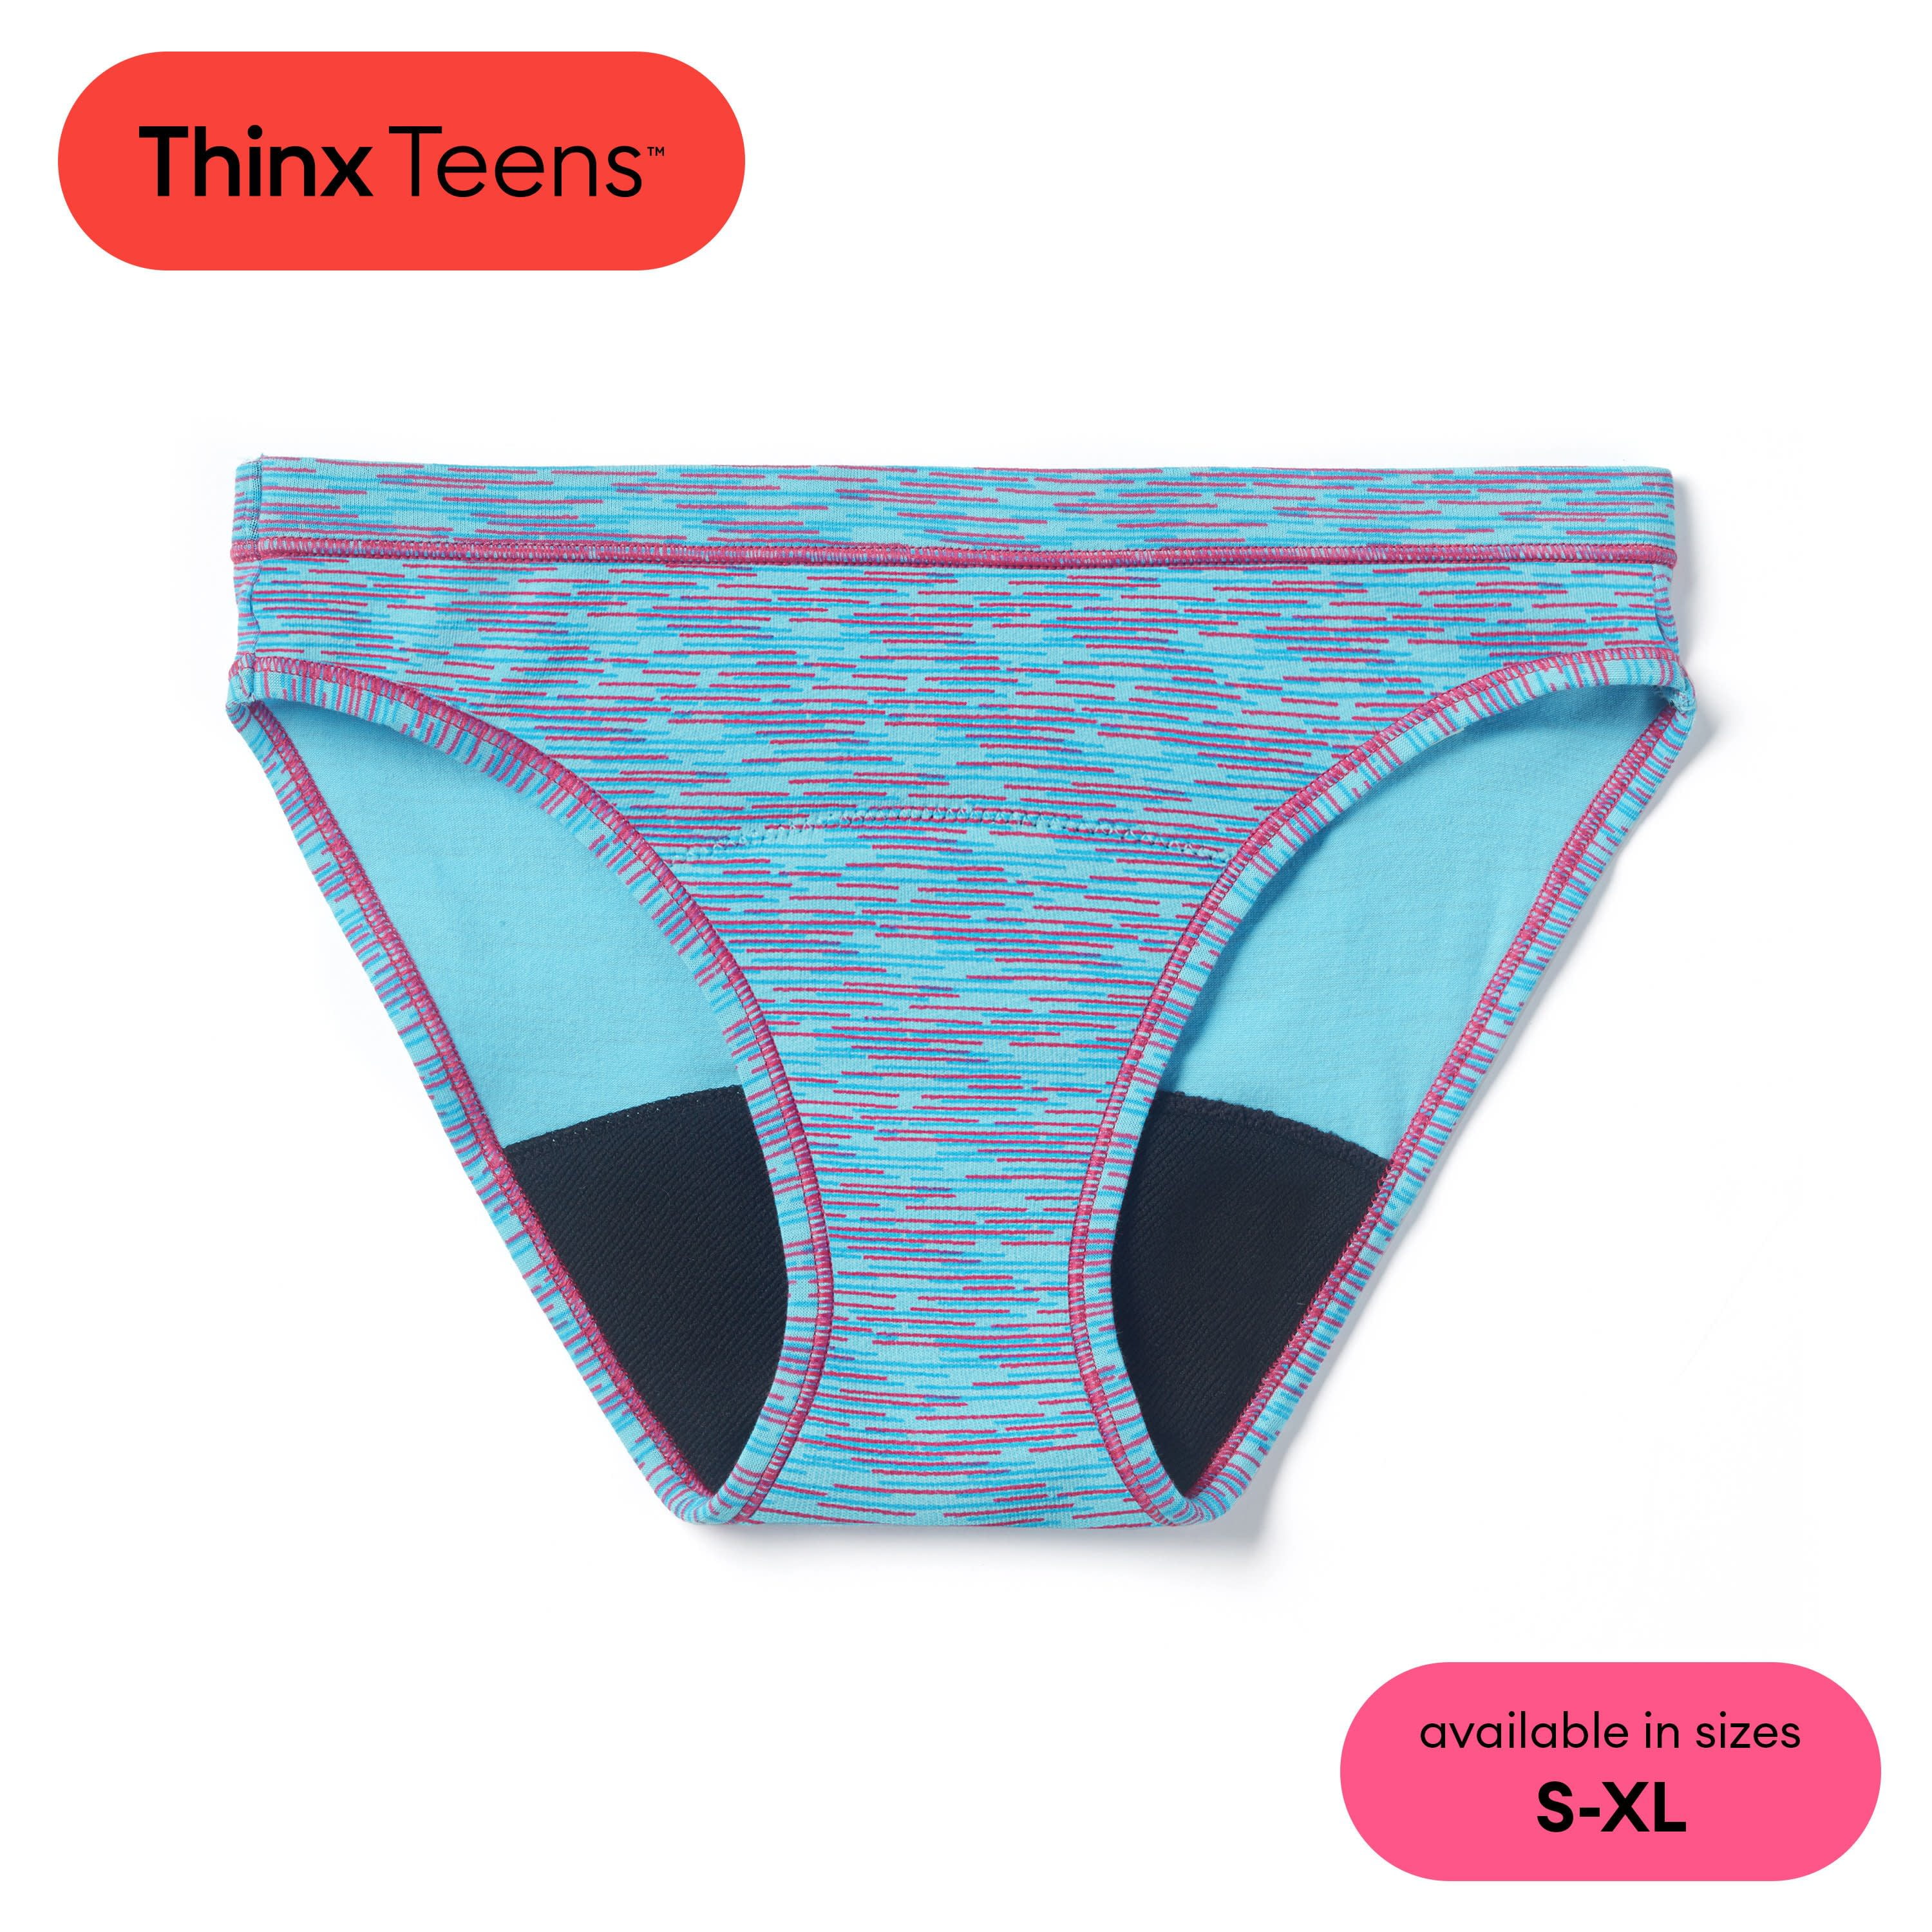 Thinx Teens Super Absorbency Cotton Bikini Period Underwear, Large, Hologram